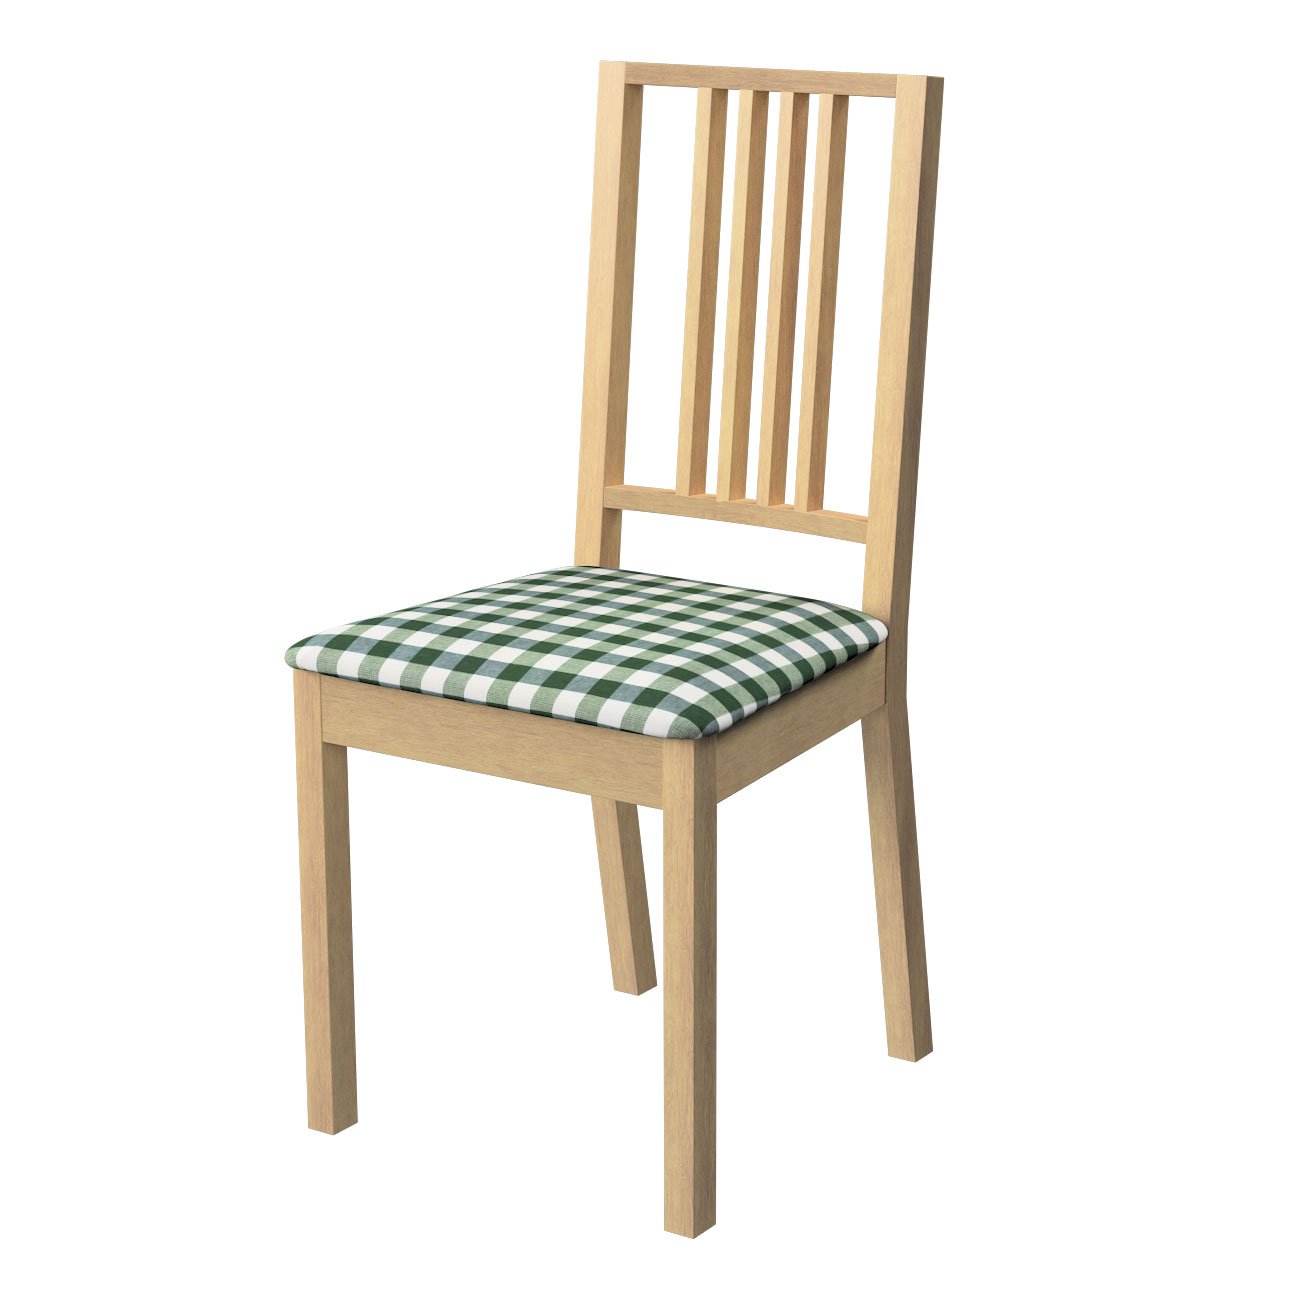 Dekoria Potah na sedák židle Börje, zelená a bílá, potah sedák židle Börje, Quadro, 144-34